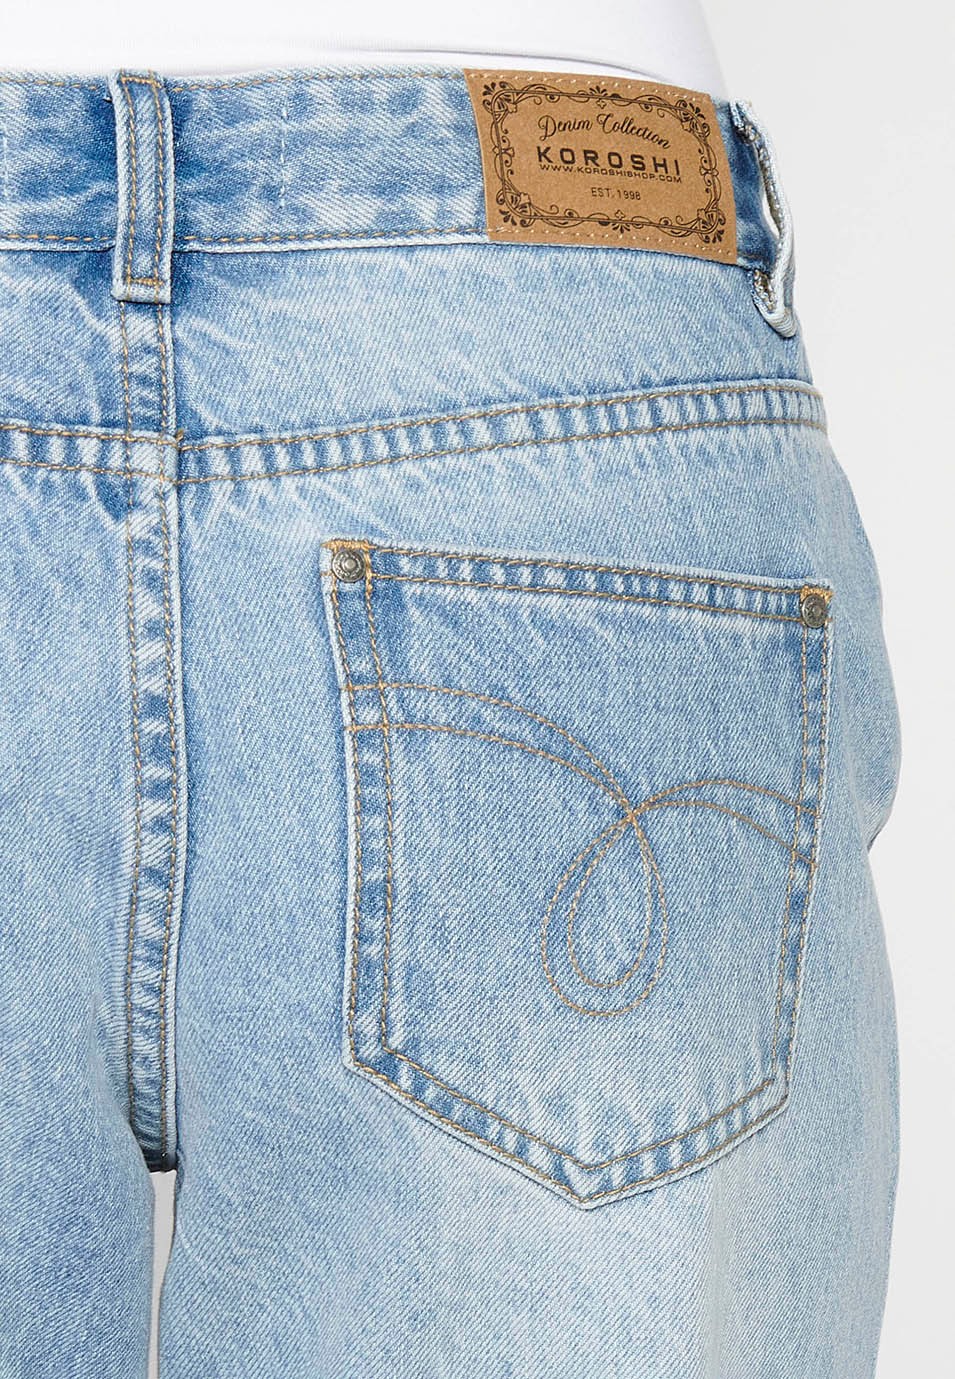 Pantalón largo recto con detalles de rotos delanteros color azul para mujer